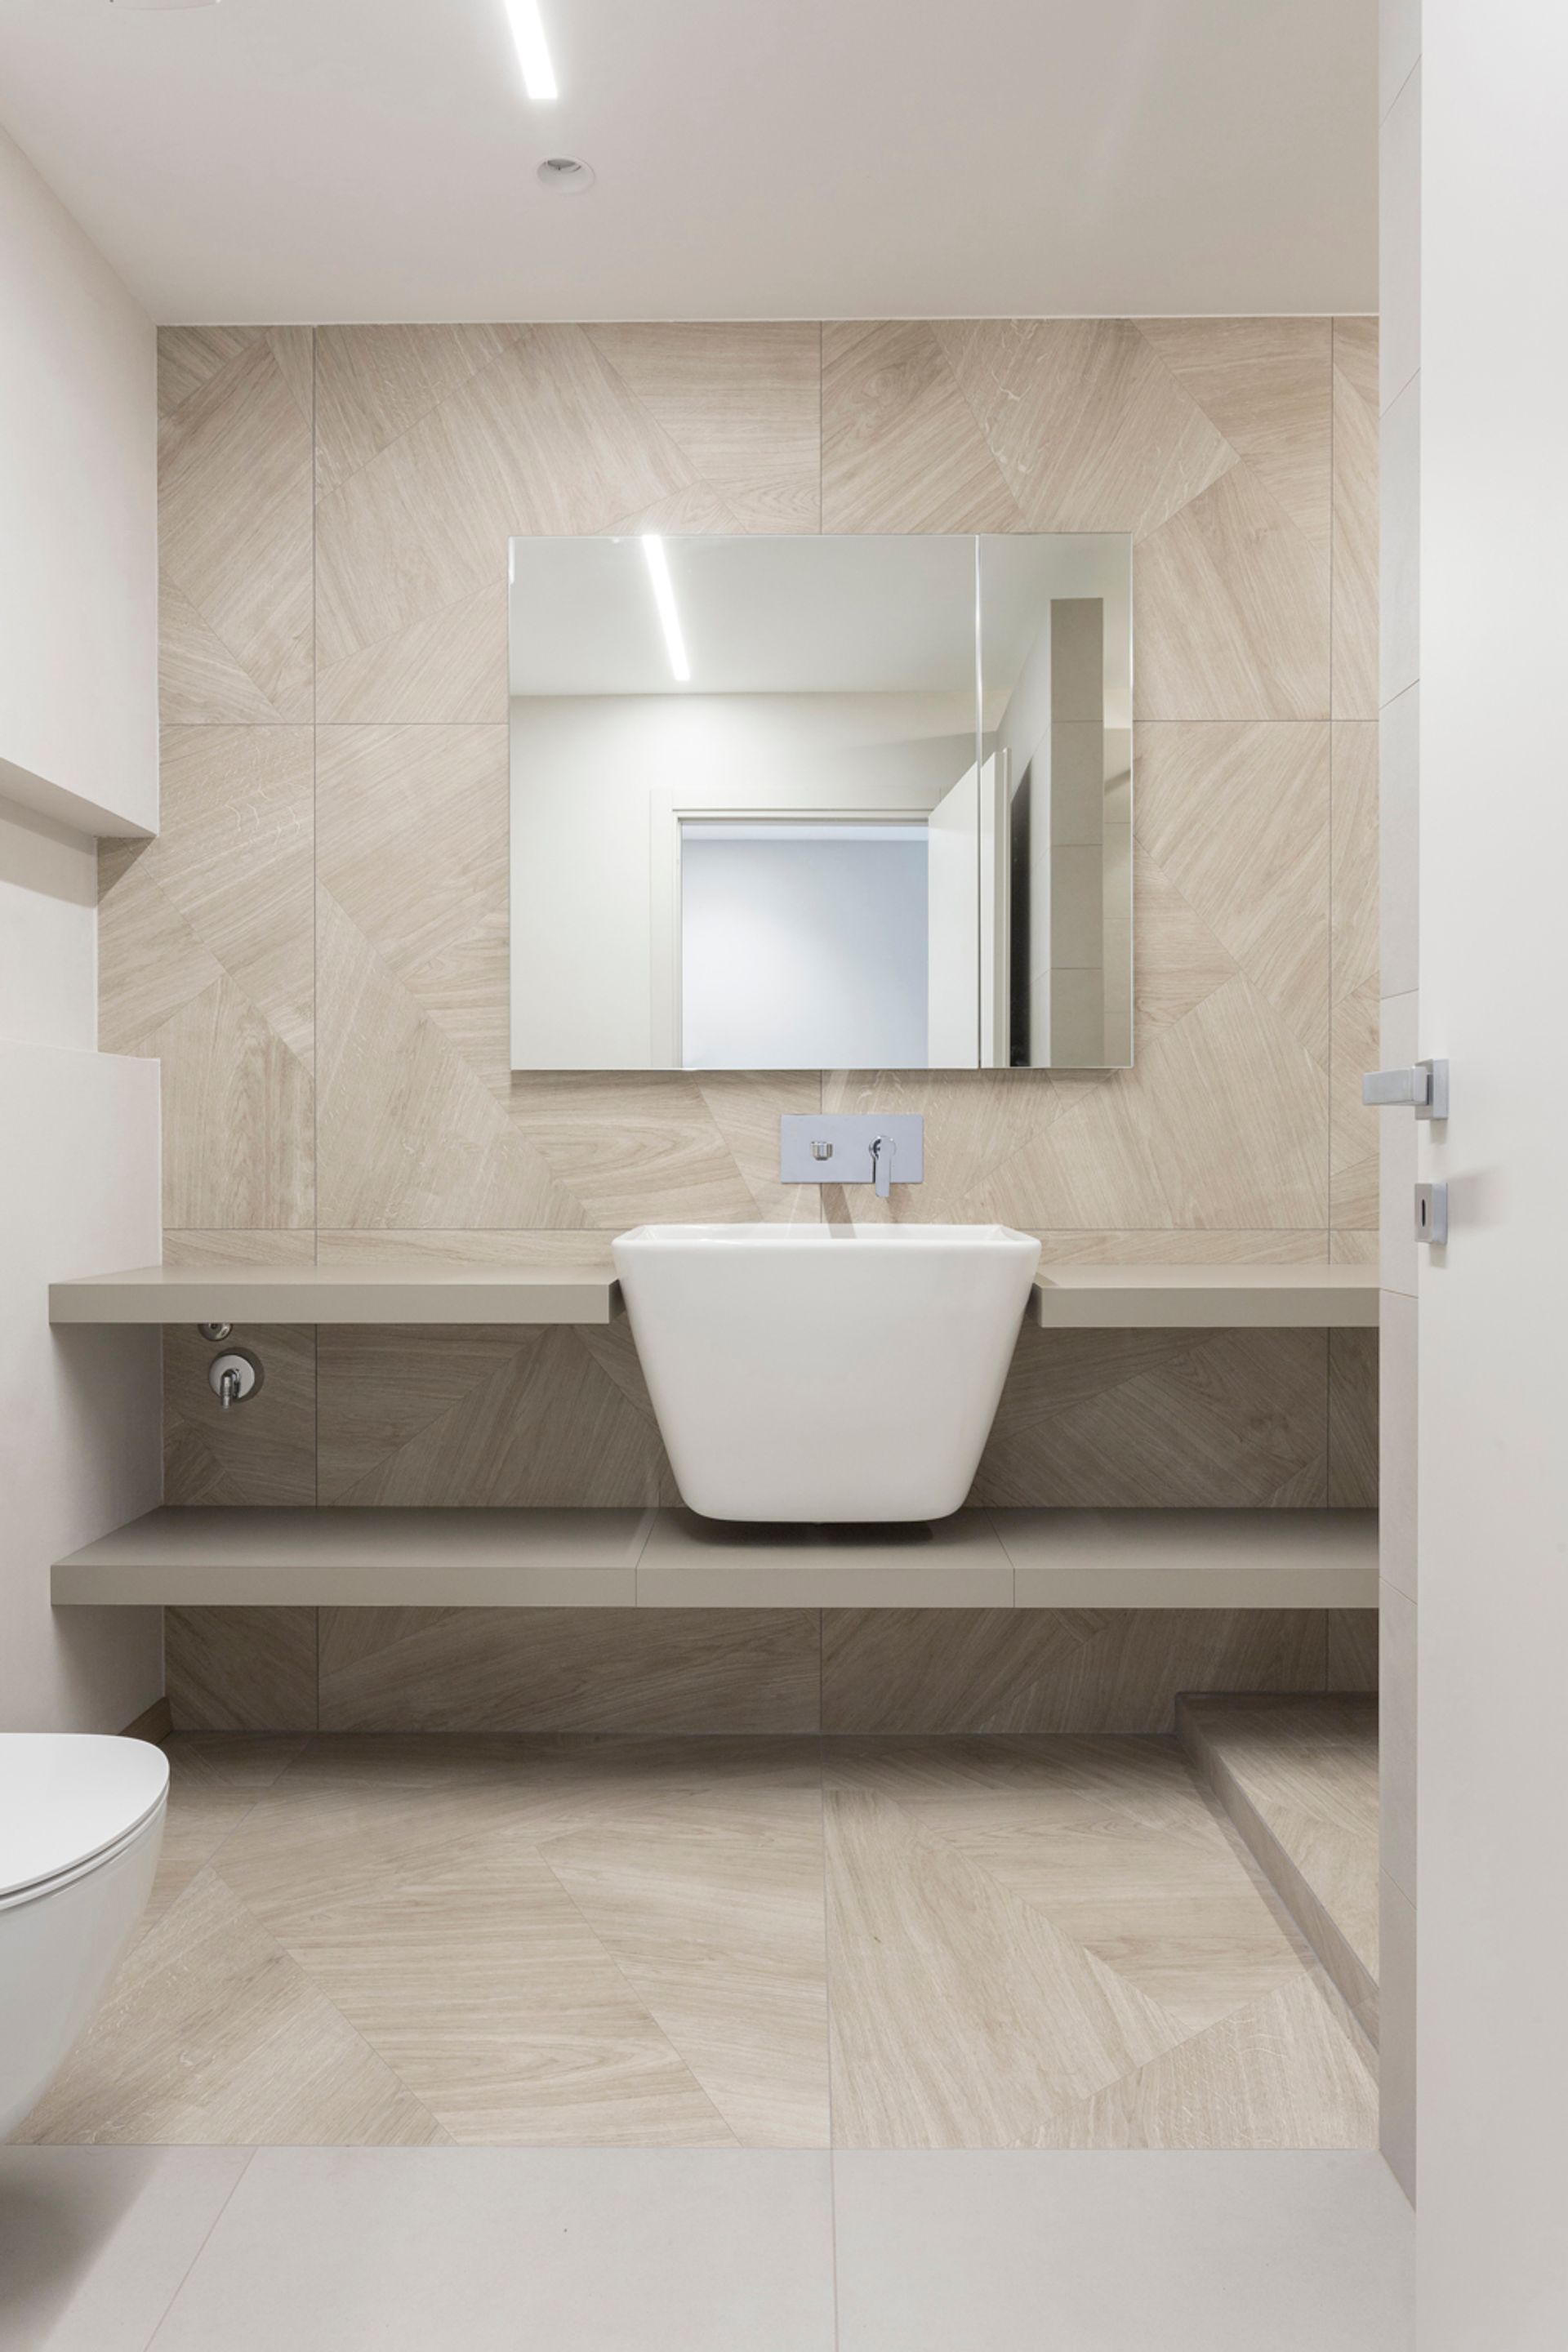 Interior design project, holiday house renovation Lake Garda, Lake Como, Lake Iseo. Officina Magisafi architecture design - bathroom